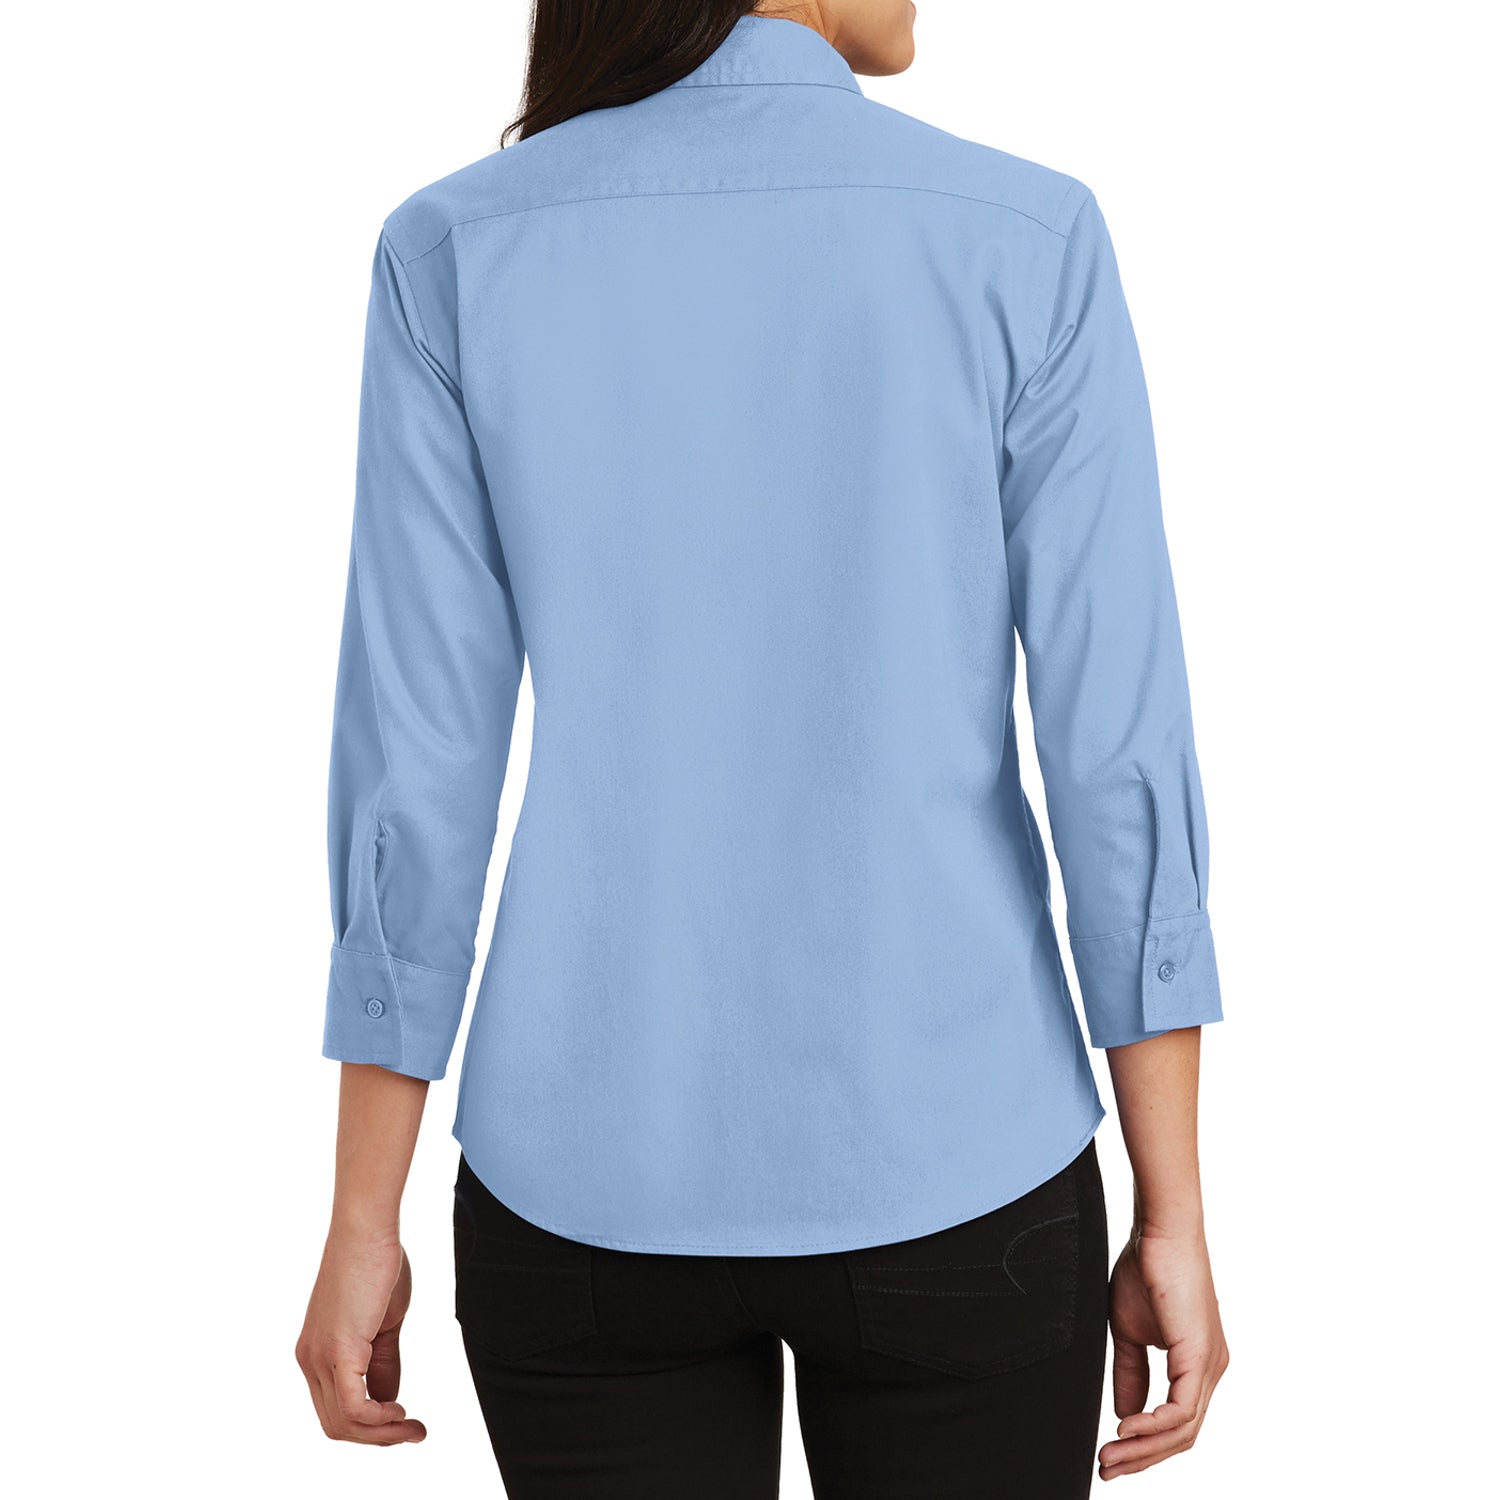 Buy MihoioWomens Summer 3/4 Sleeve T-Shirts Trendy Casual Cute